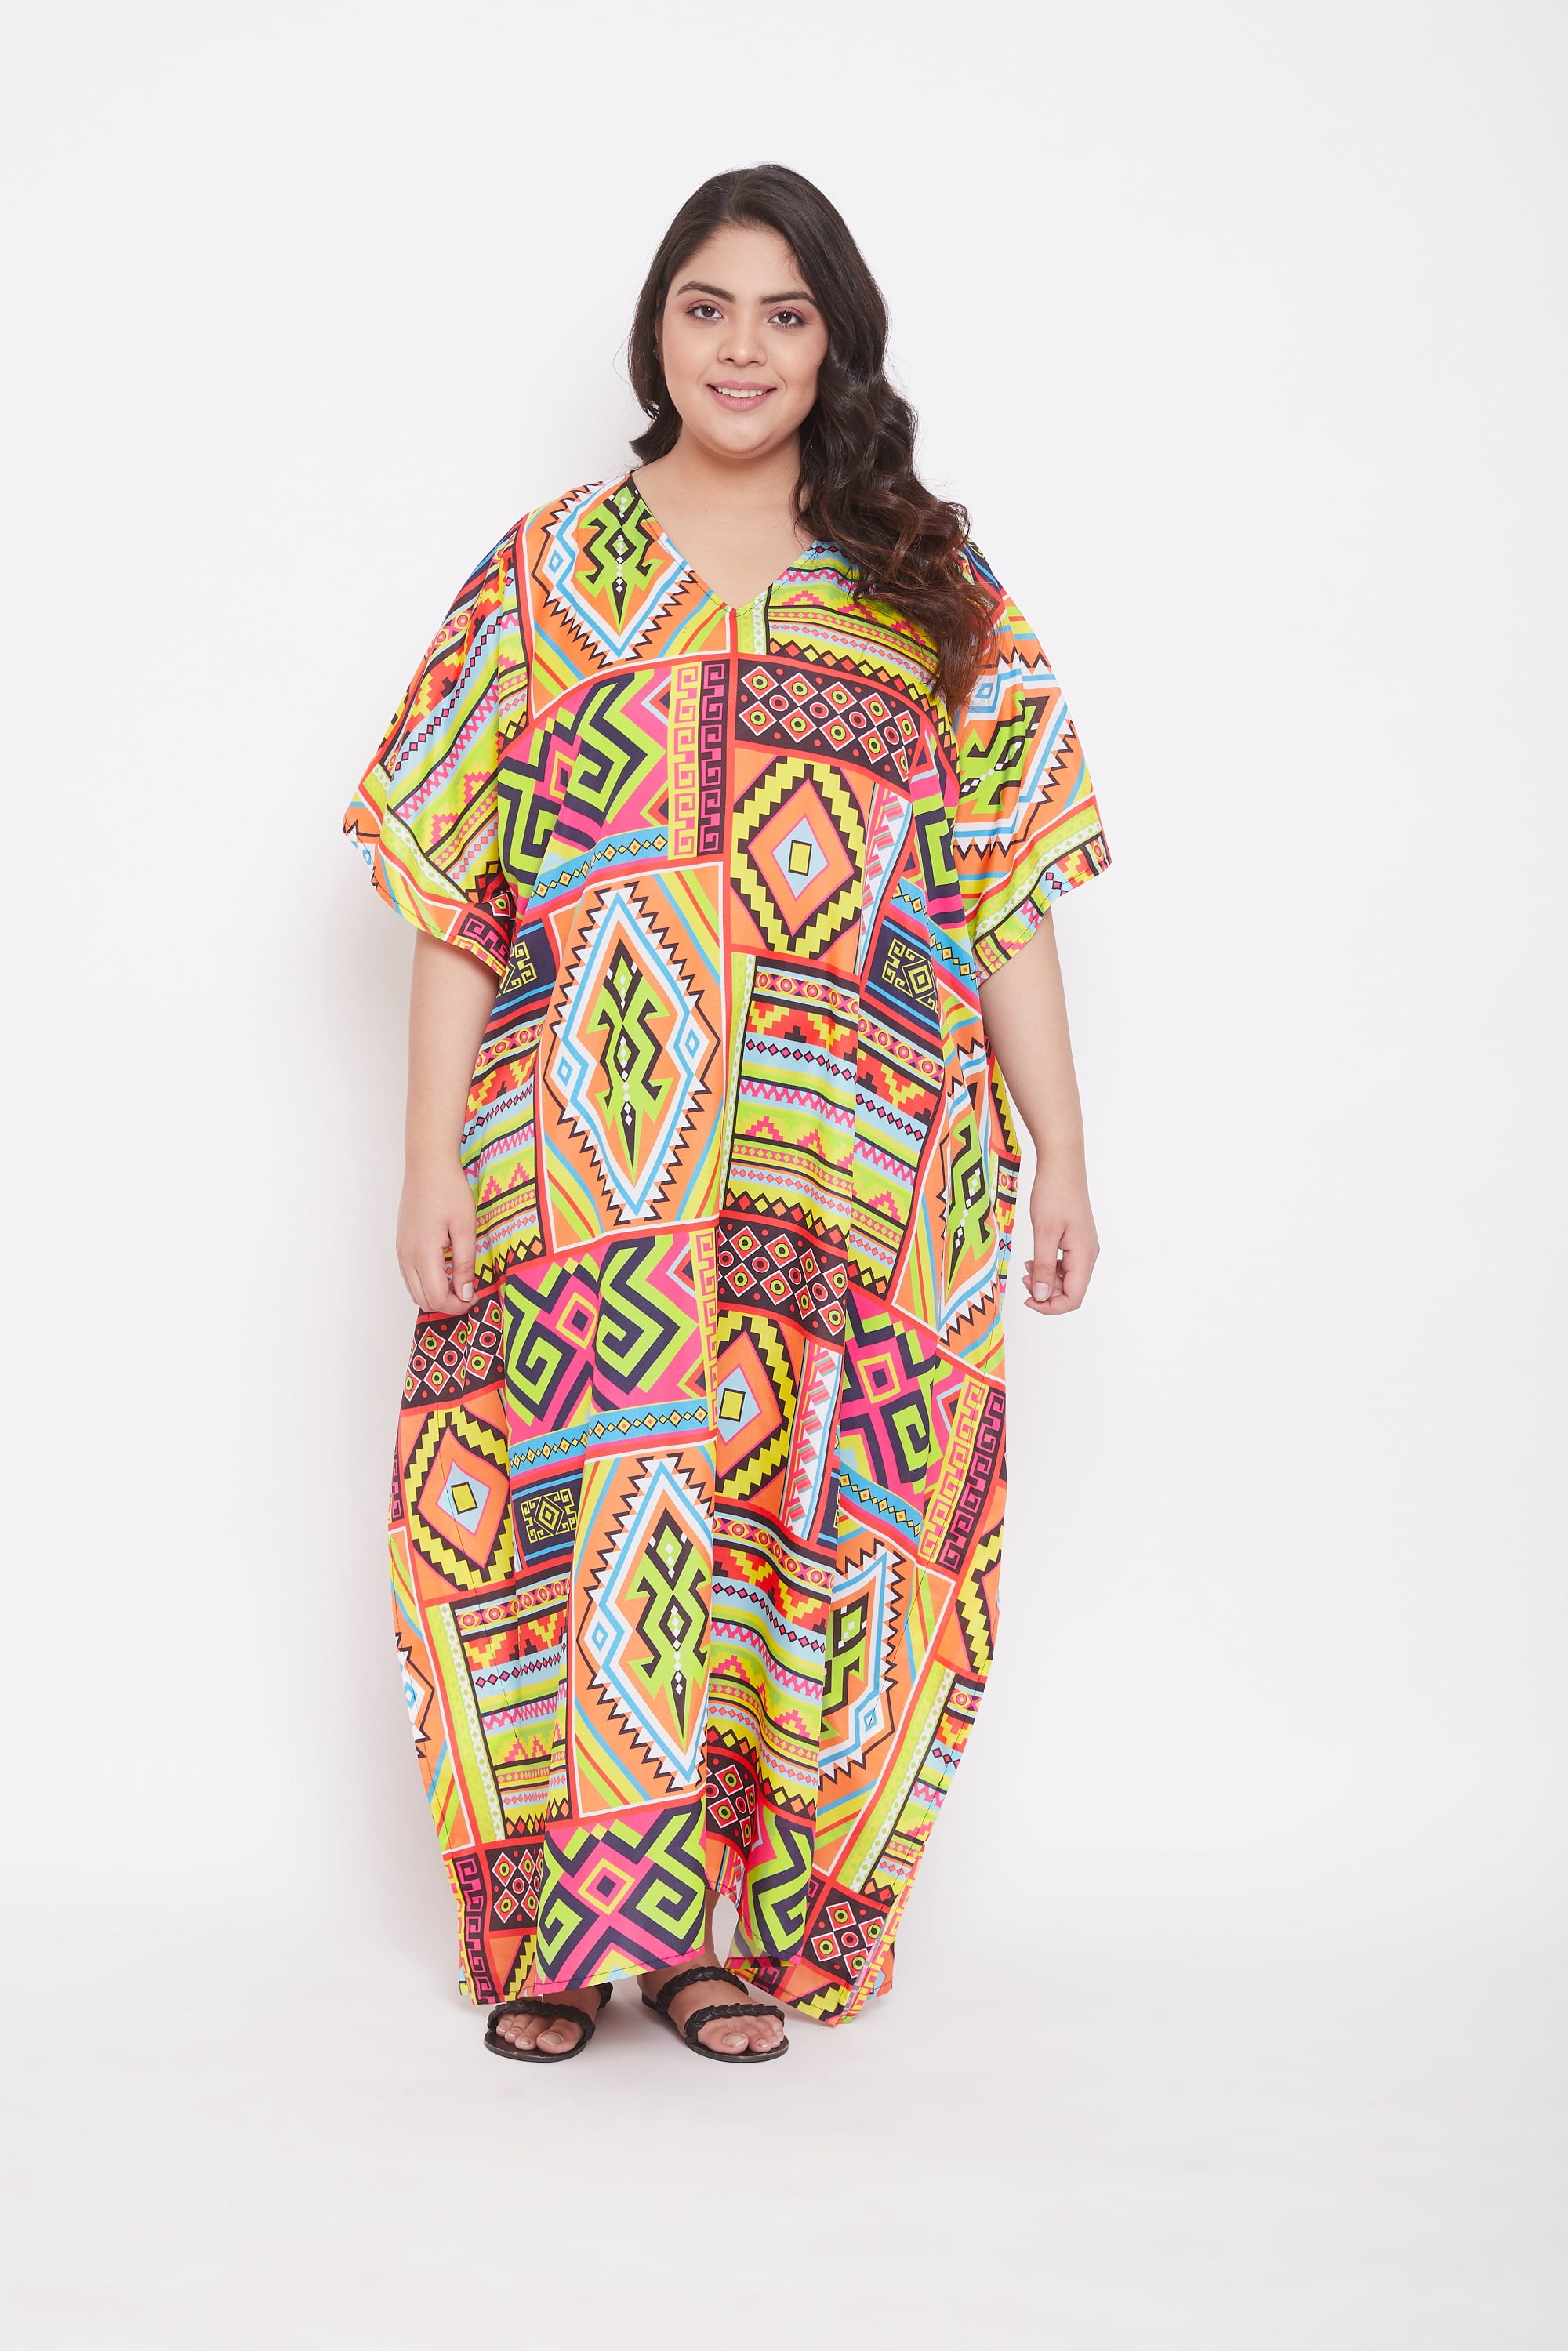 Long Size Caftan Dress for Women Long Maxi Kaftans for Ladies Loose Casual Sleepwear Evening Gown Online - Walmart.com